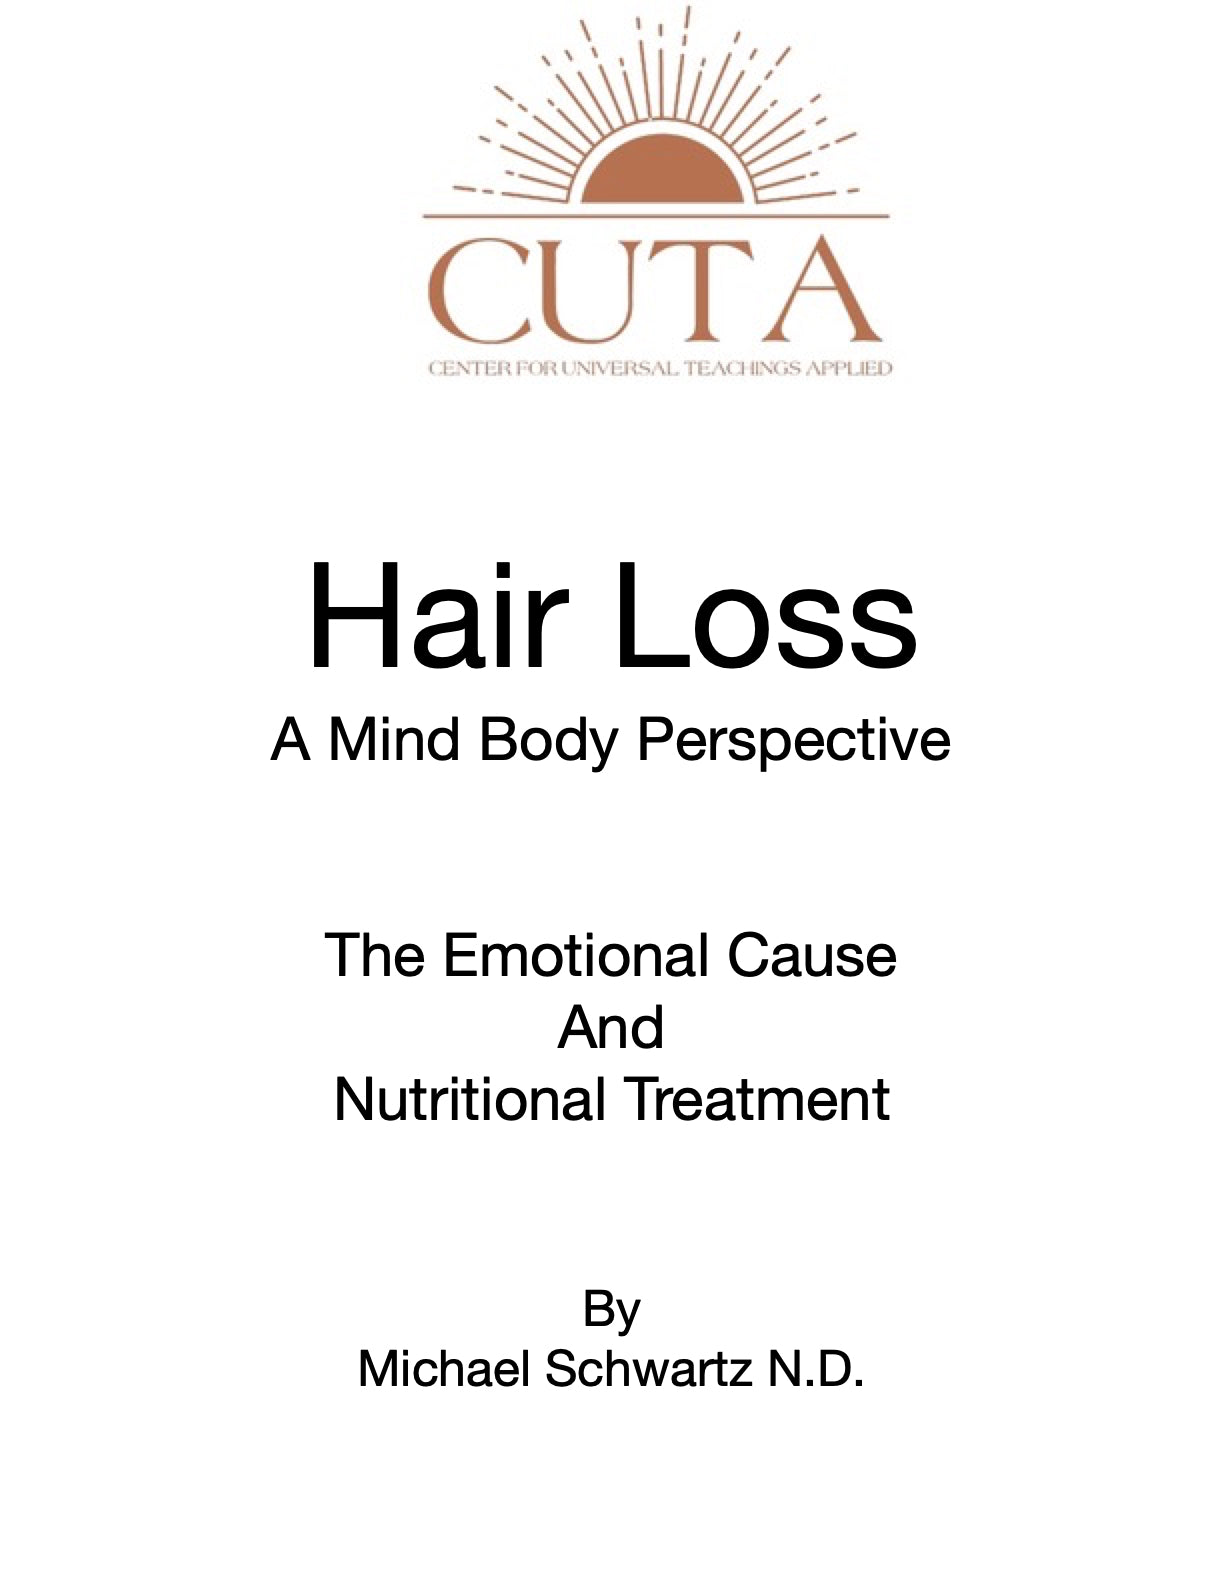 Hair Loss Booklet